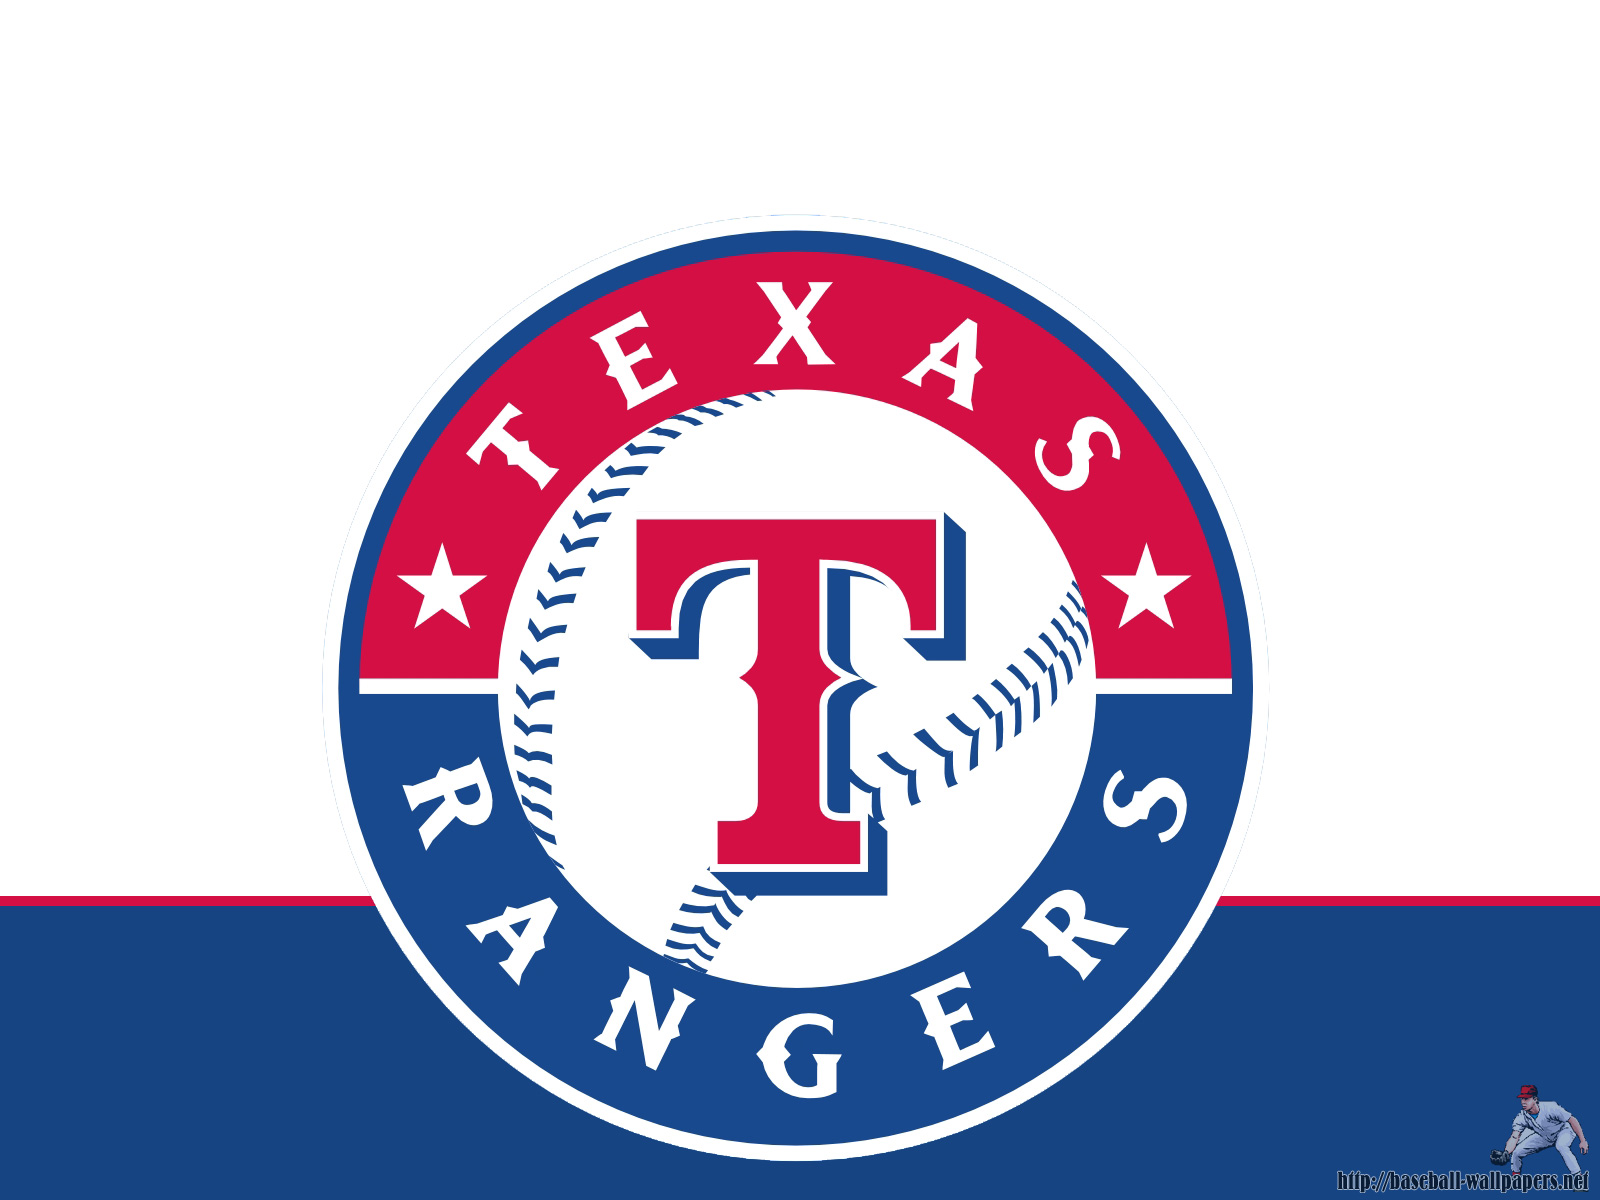 http://1.bp.blogspot.com/-gKgC7tnHl-4/TqBCPZBvXmI/AAAAAAAAAPA/xVxzMY22Bk0/s1600/texas_rangers_logo_wallpaper.jpg